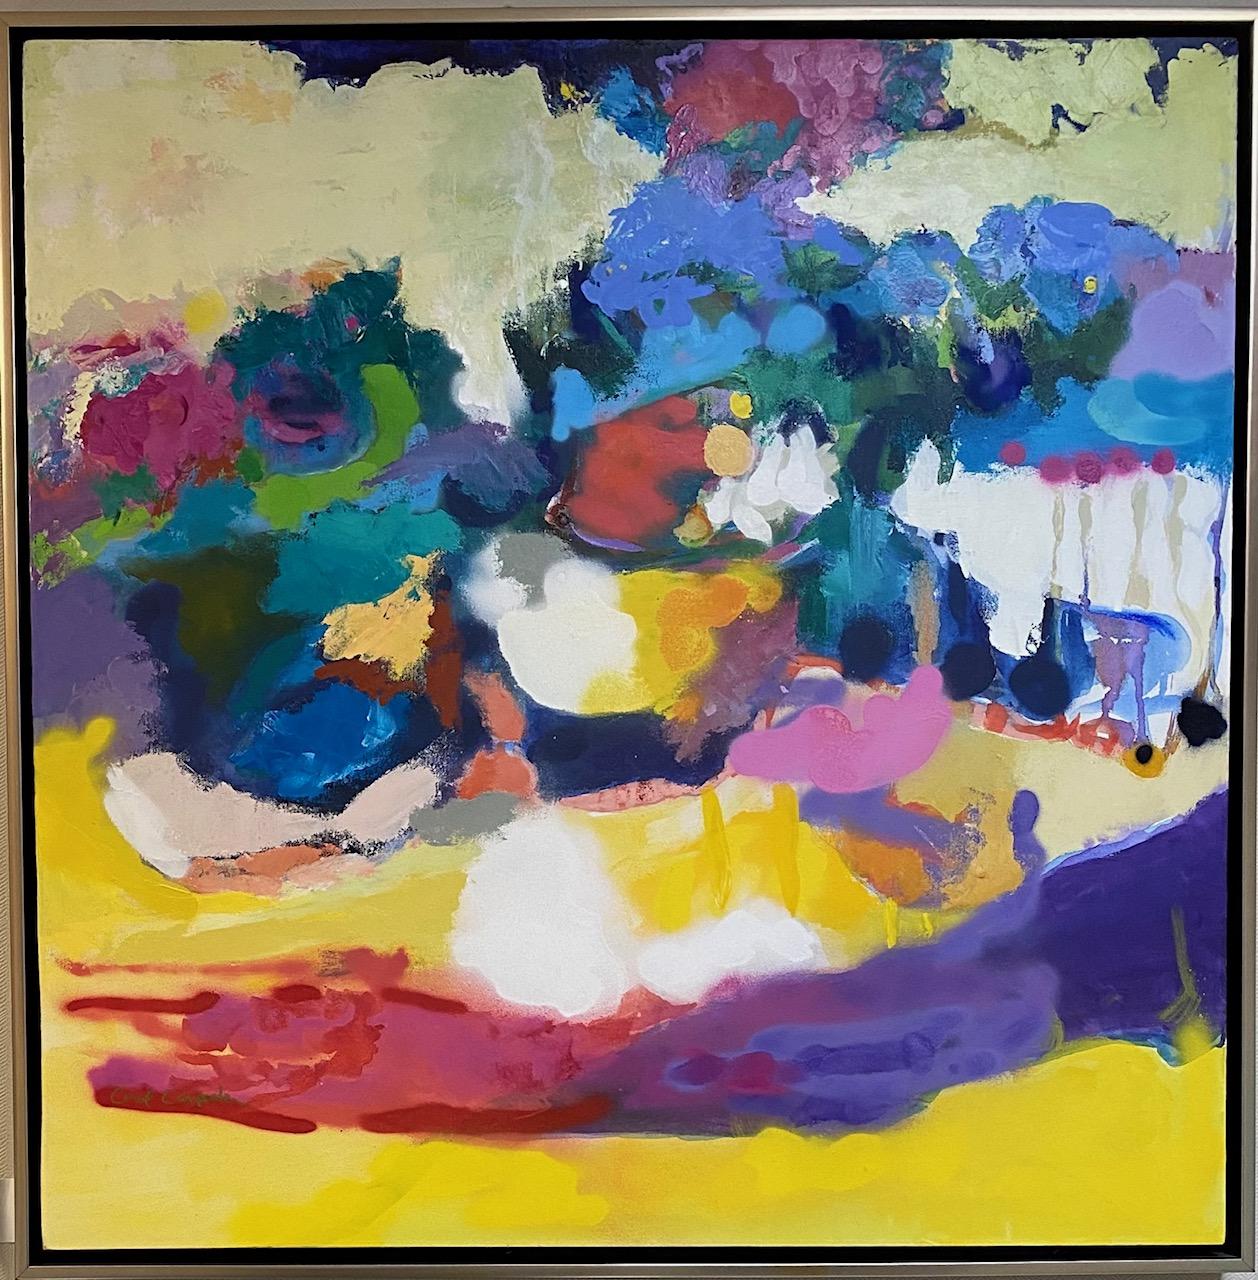 Carol Carpenter Landscape Painting - River Walk, original 36x36 abstract expressionist landscape